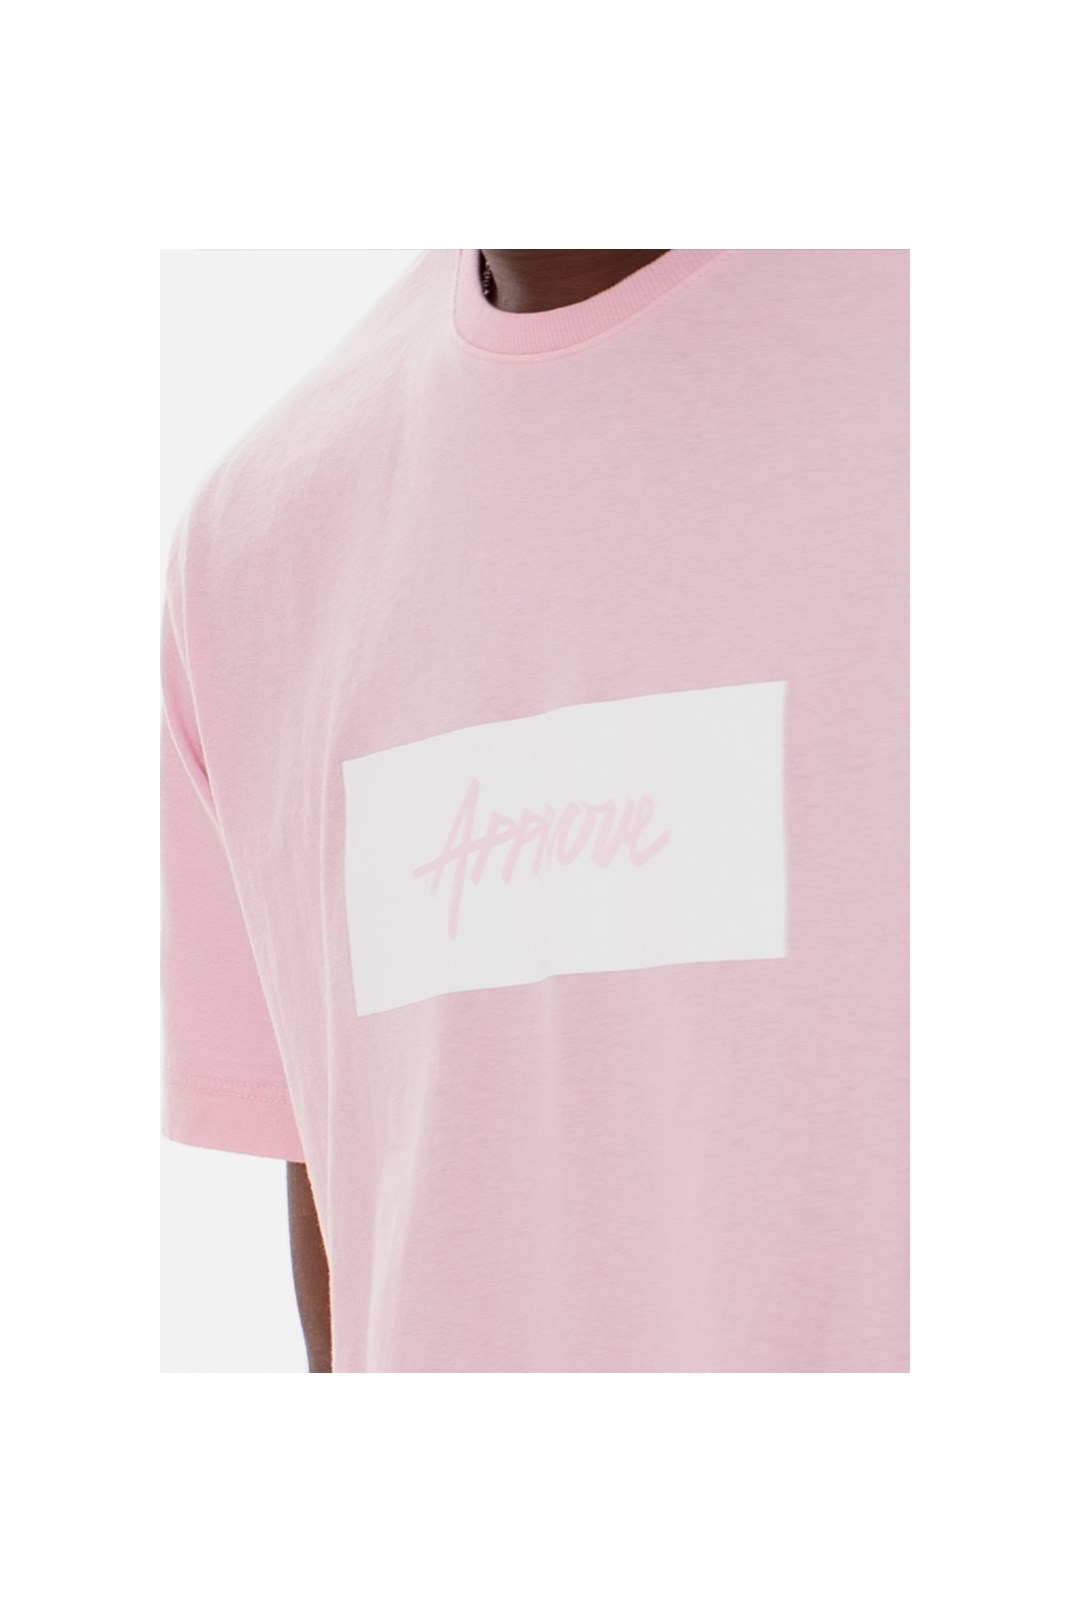 Camiseta Slim Approve Classic Rosa e Branca V1